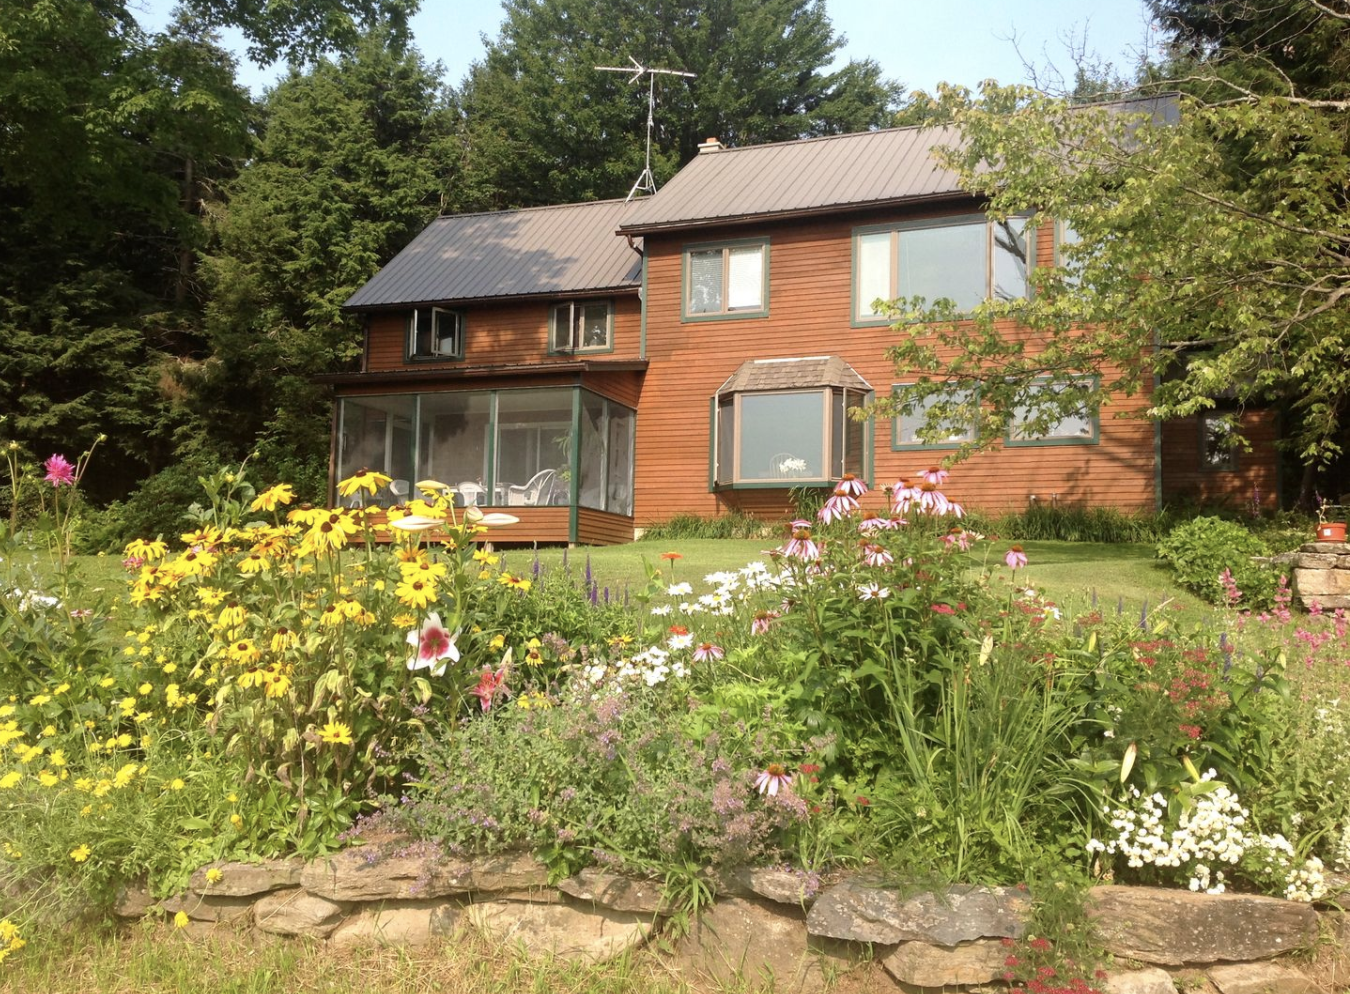 Plan an affordable leaf peeping getaway in Vermont with HomeExchange